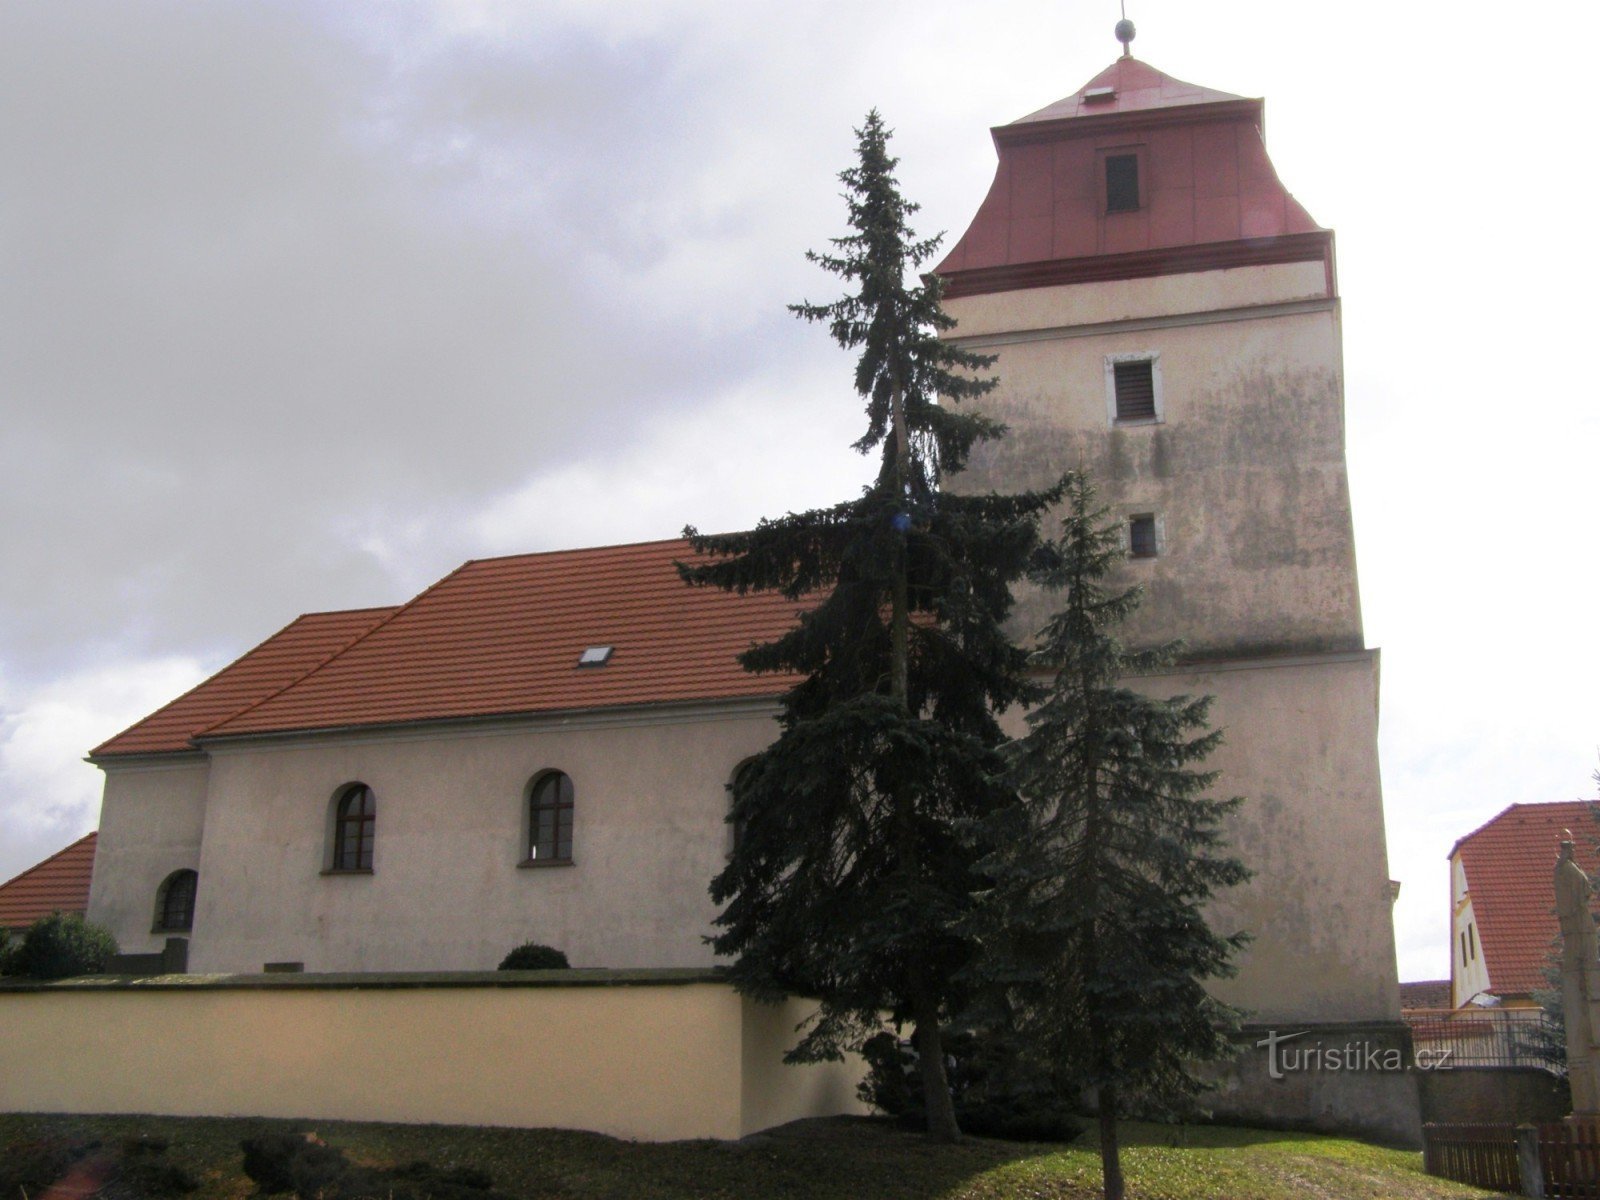 Libřice - Kirche St. Micha